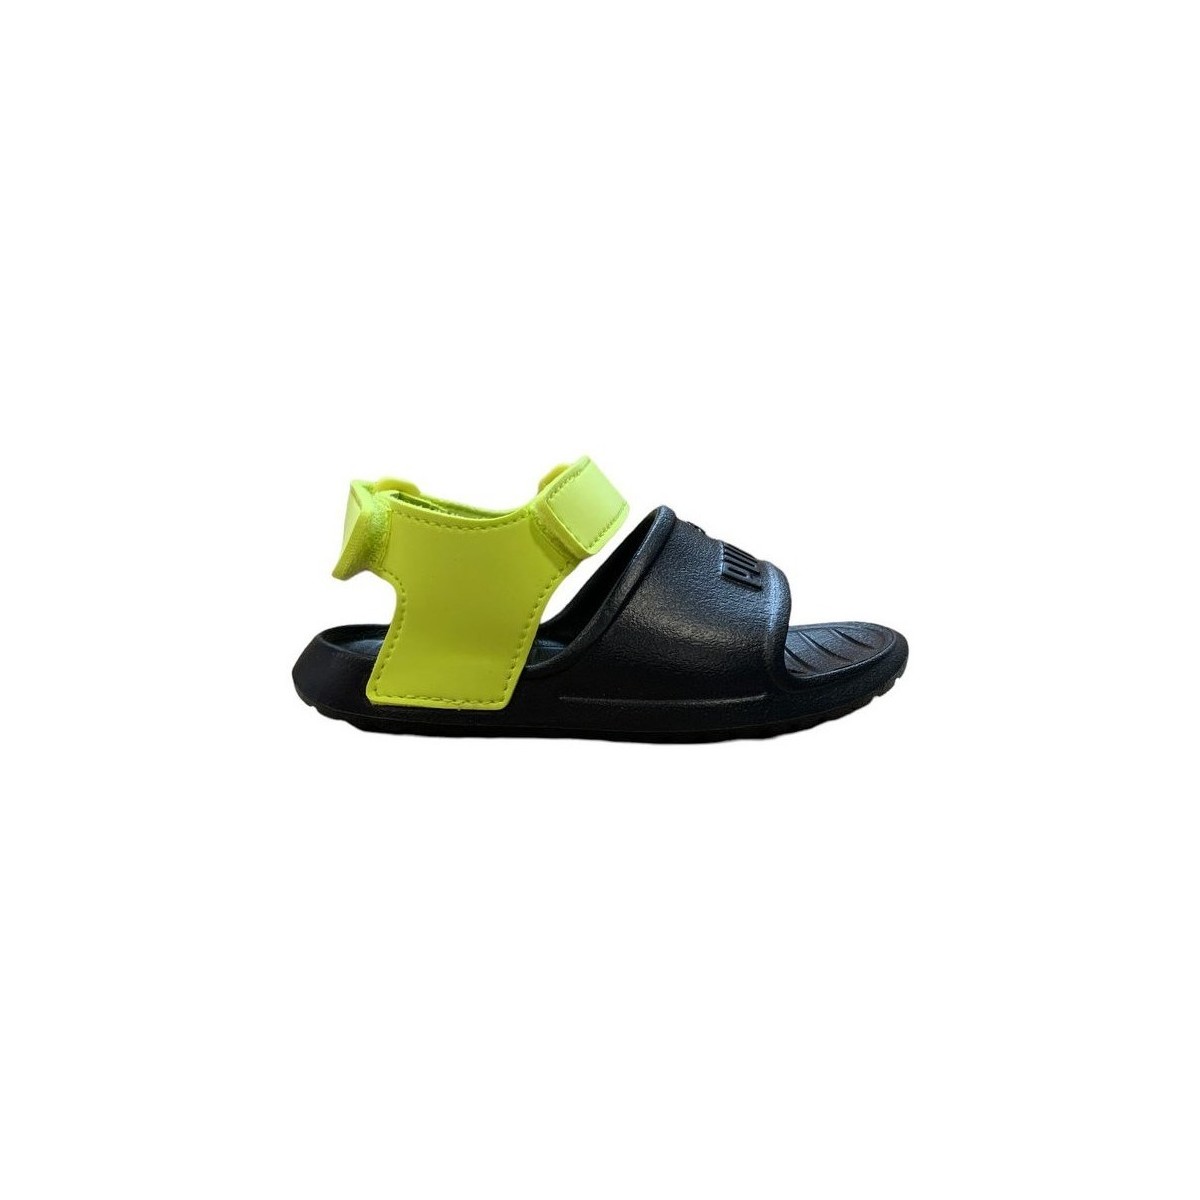 kengät Lapset Sandaalit ja avokkaat Puma Divecat V2 Injex PS Mustat, Vihreät